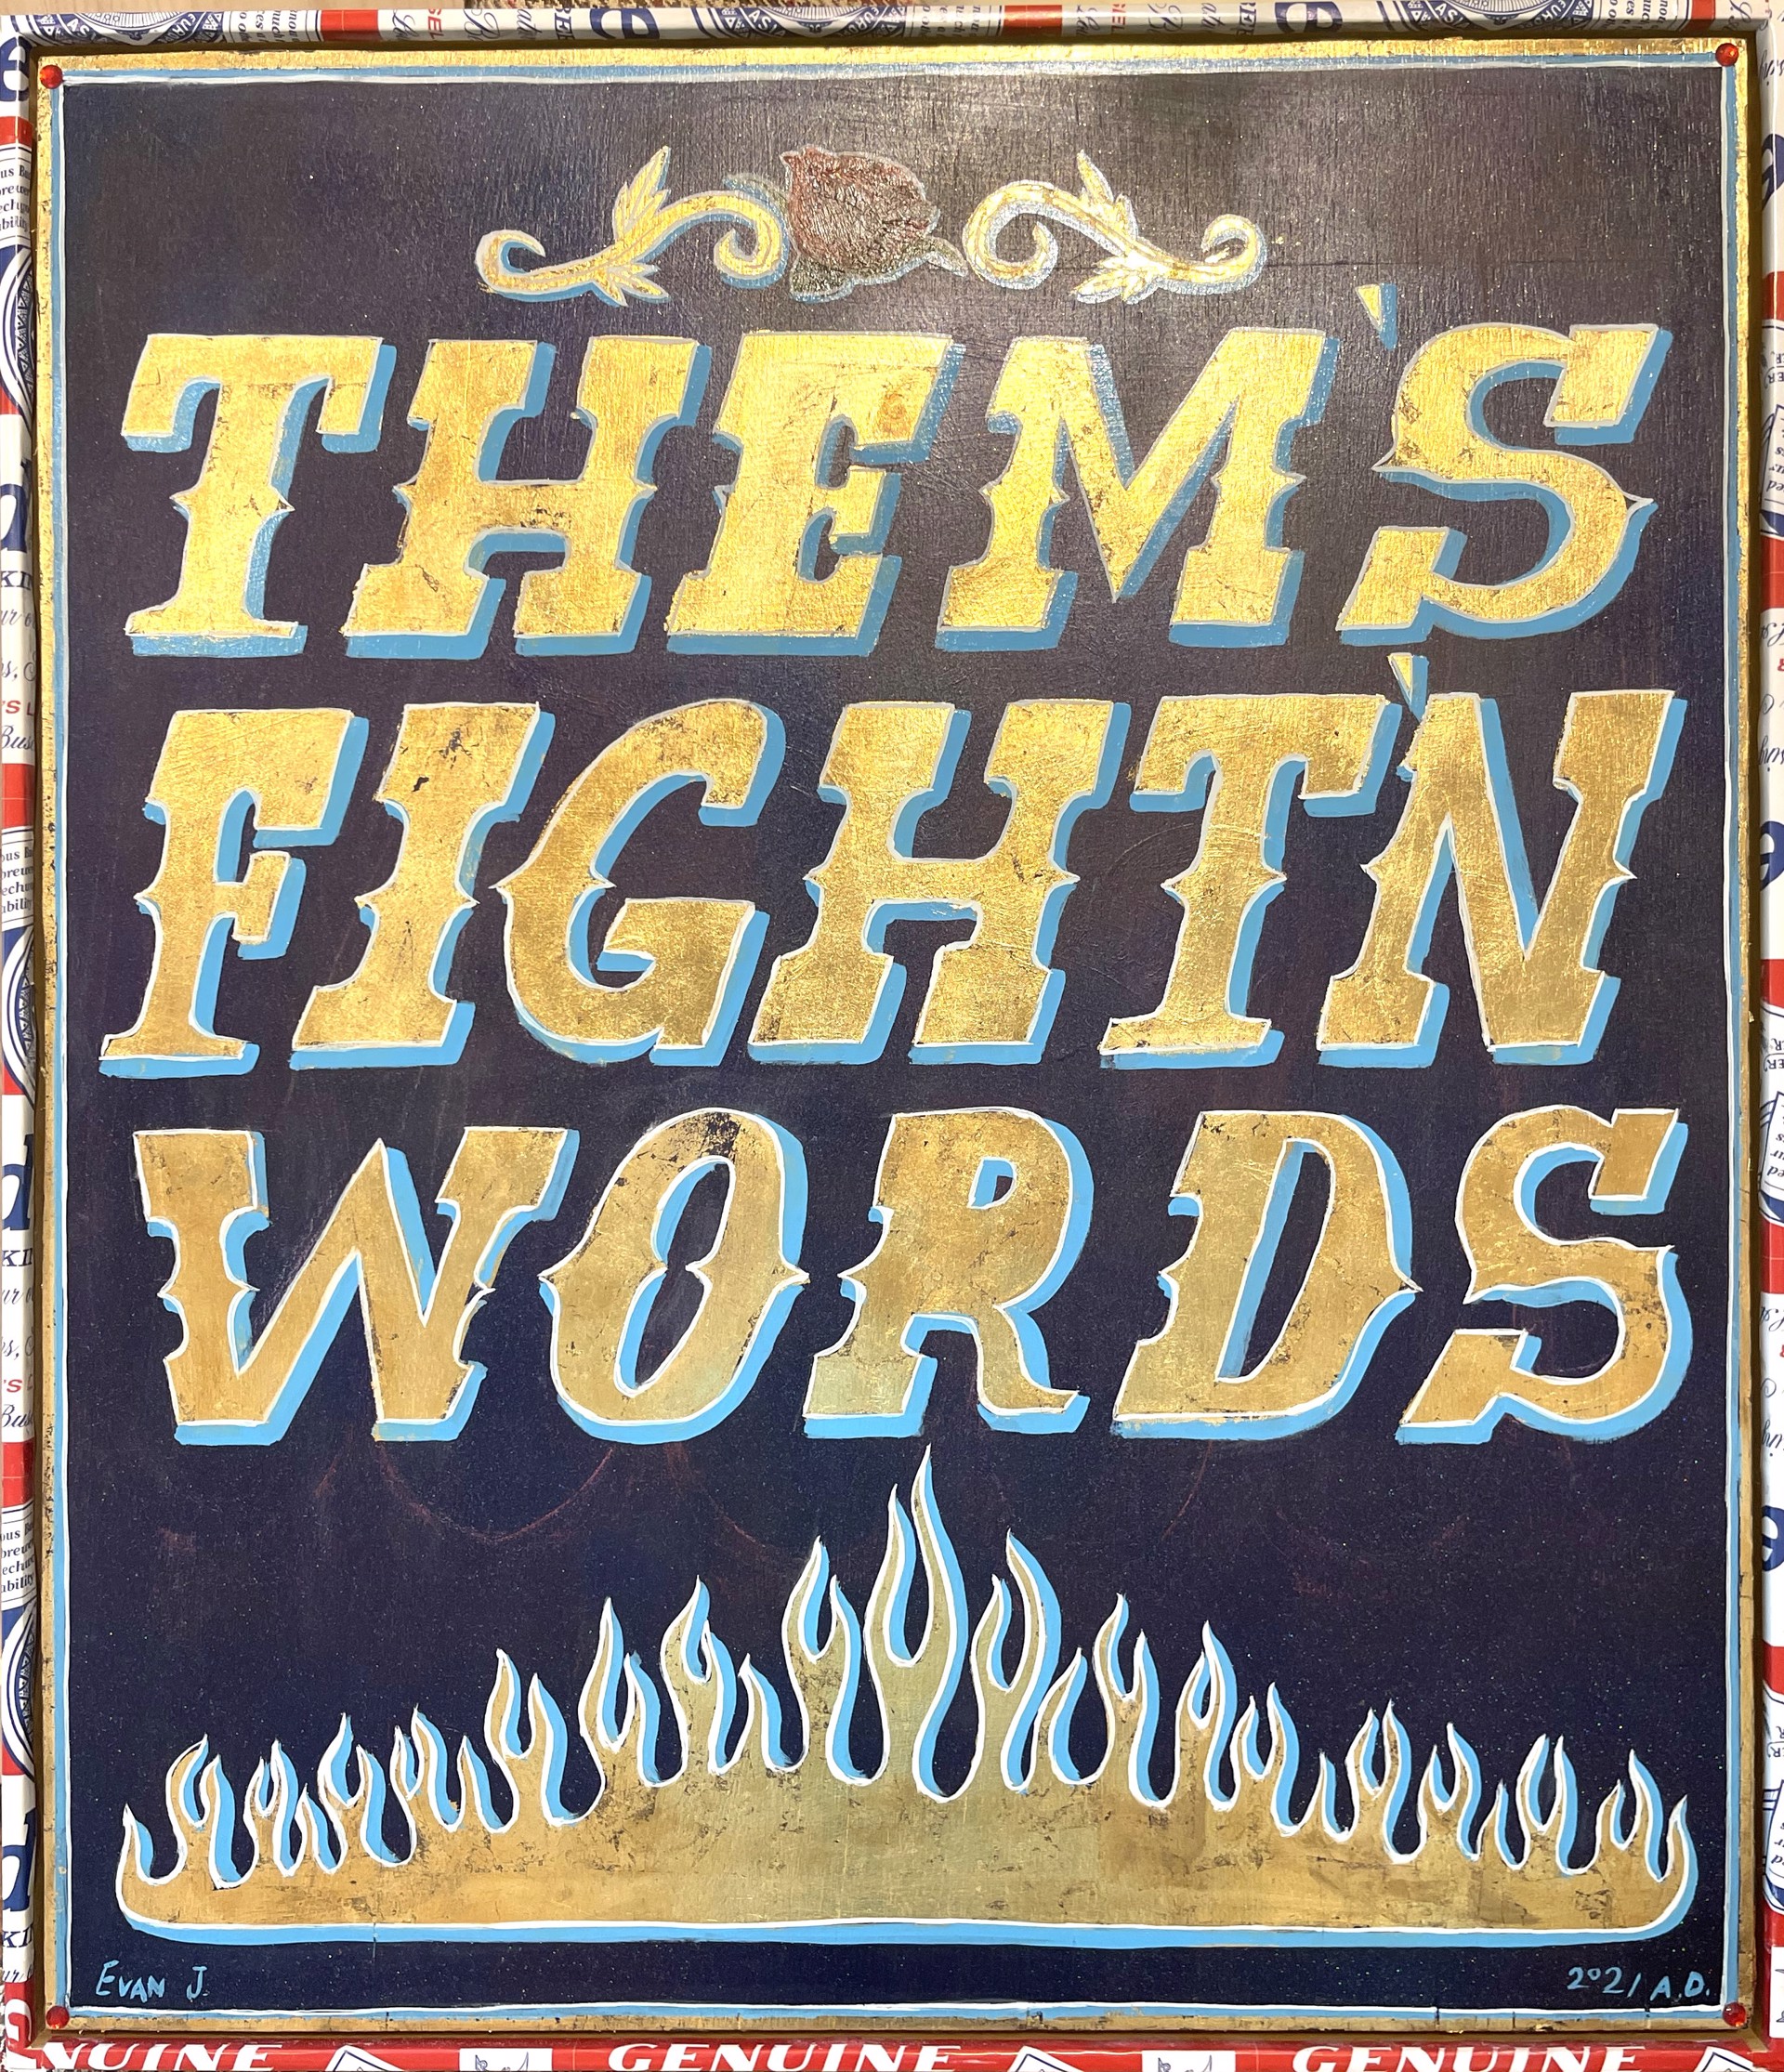 Them's Fighting Words by Evan Jones